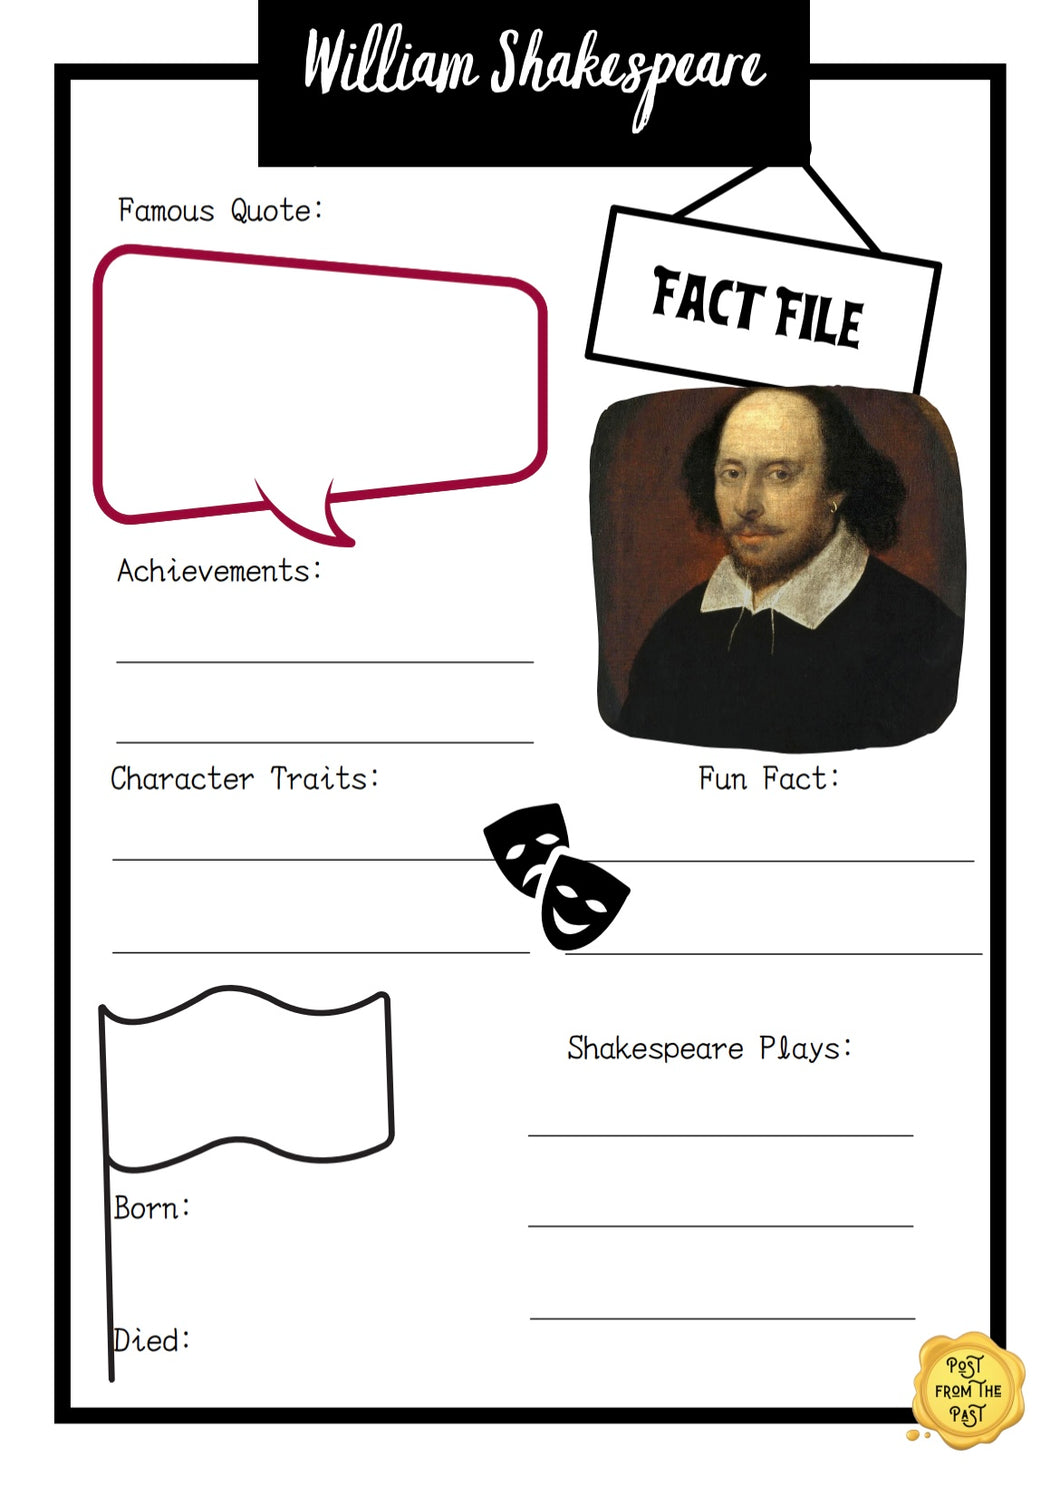 William Shakespeare Fact File